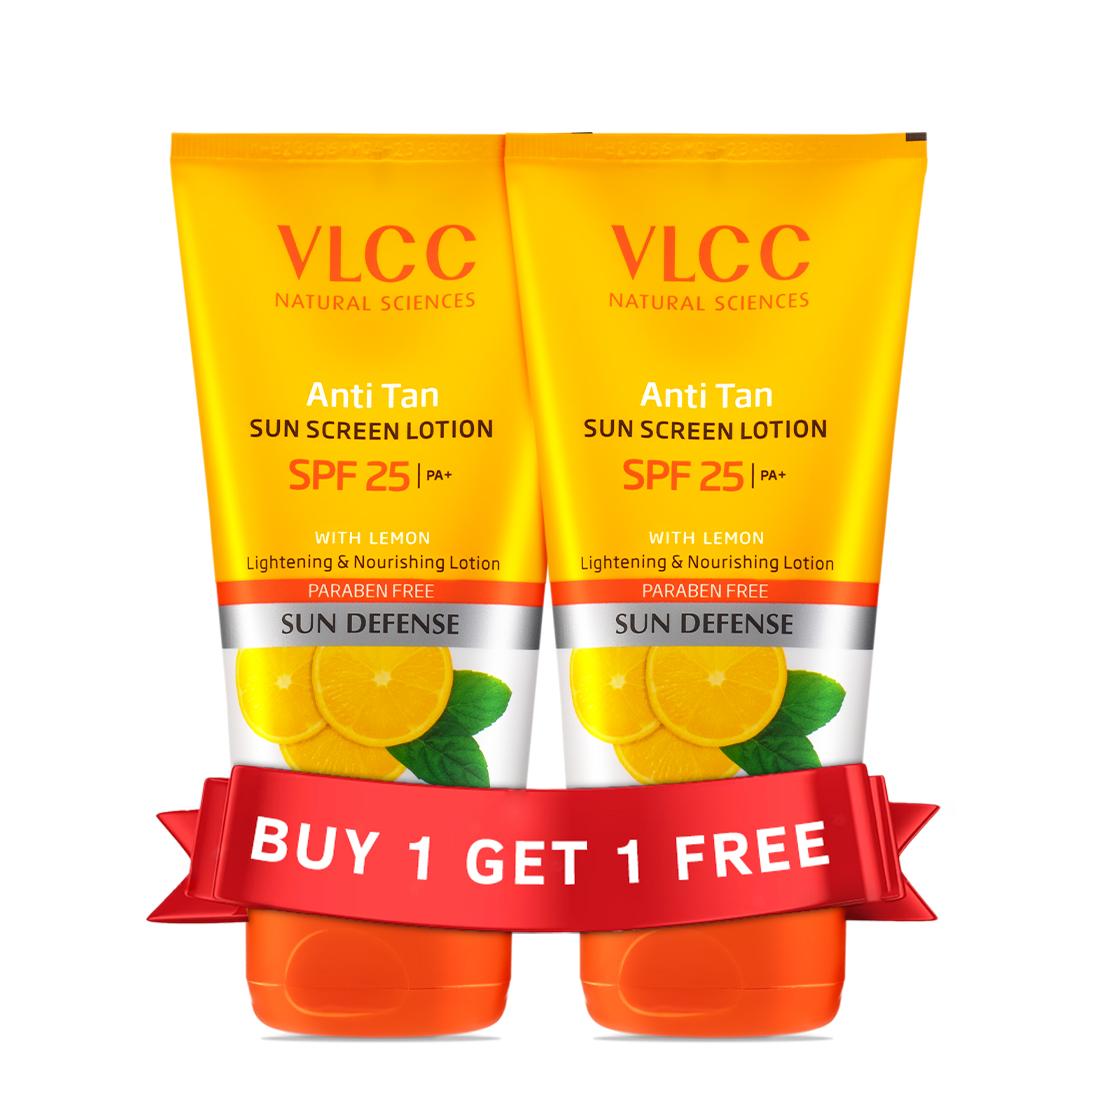 VLCC Anti Tan Sun Screen Lotion - SPF 25 PA+ - Protect Your Skin from Harmful UV Rays